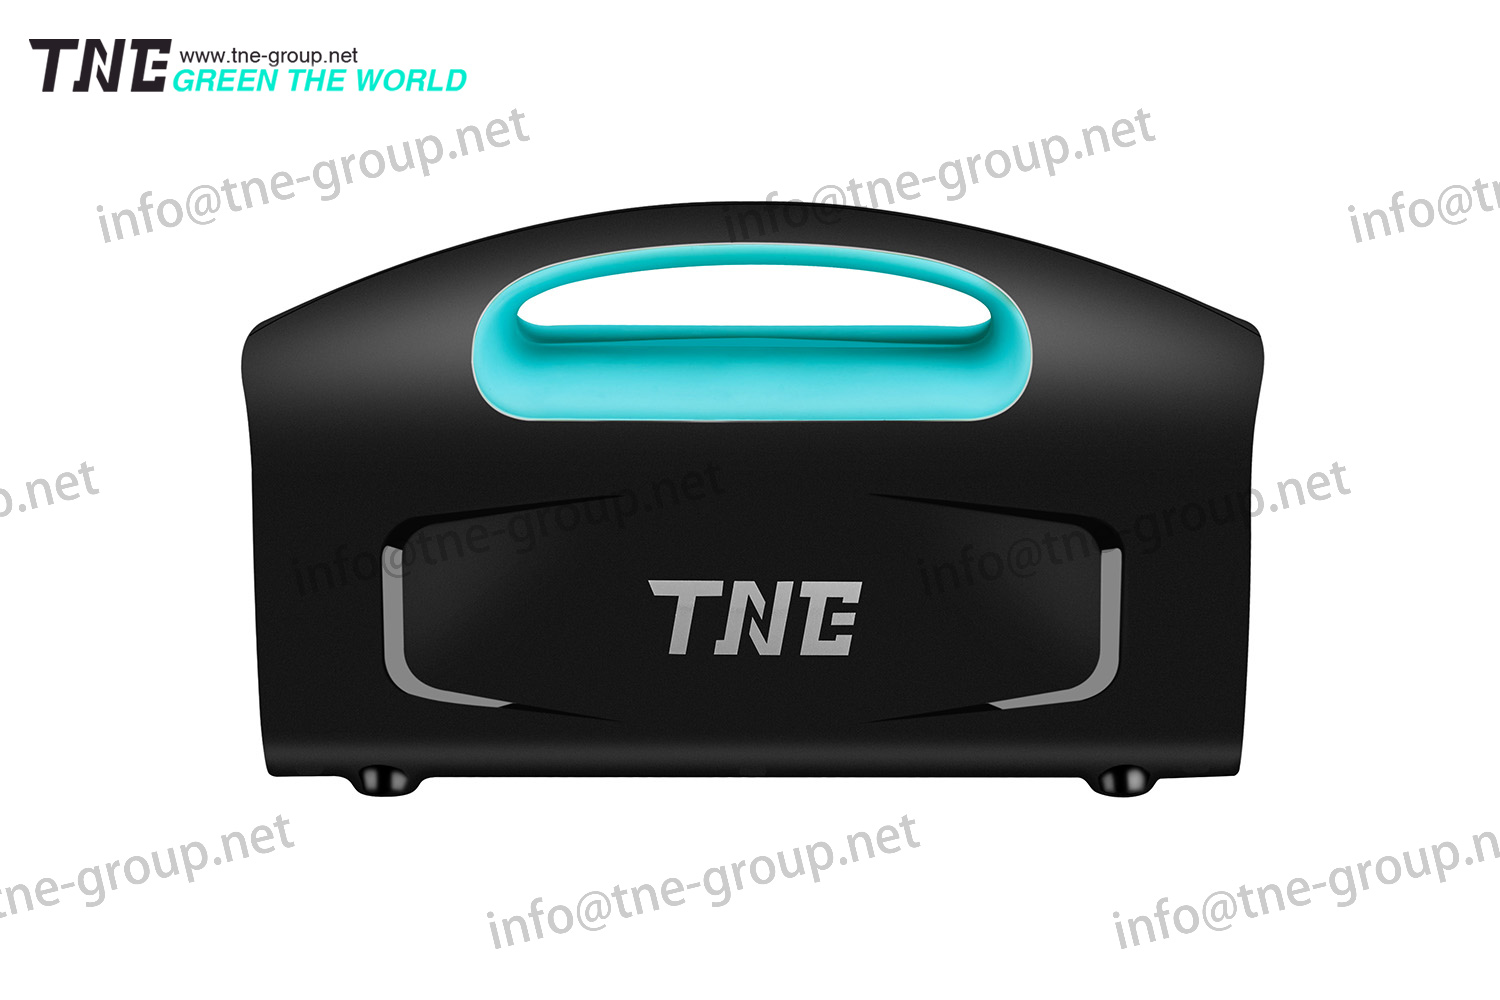 TNE for Smart Solar Online Portable Generator Power Bank UPS System